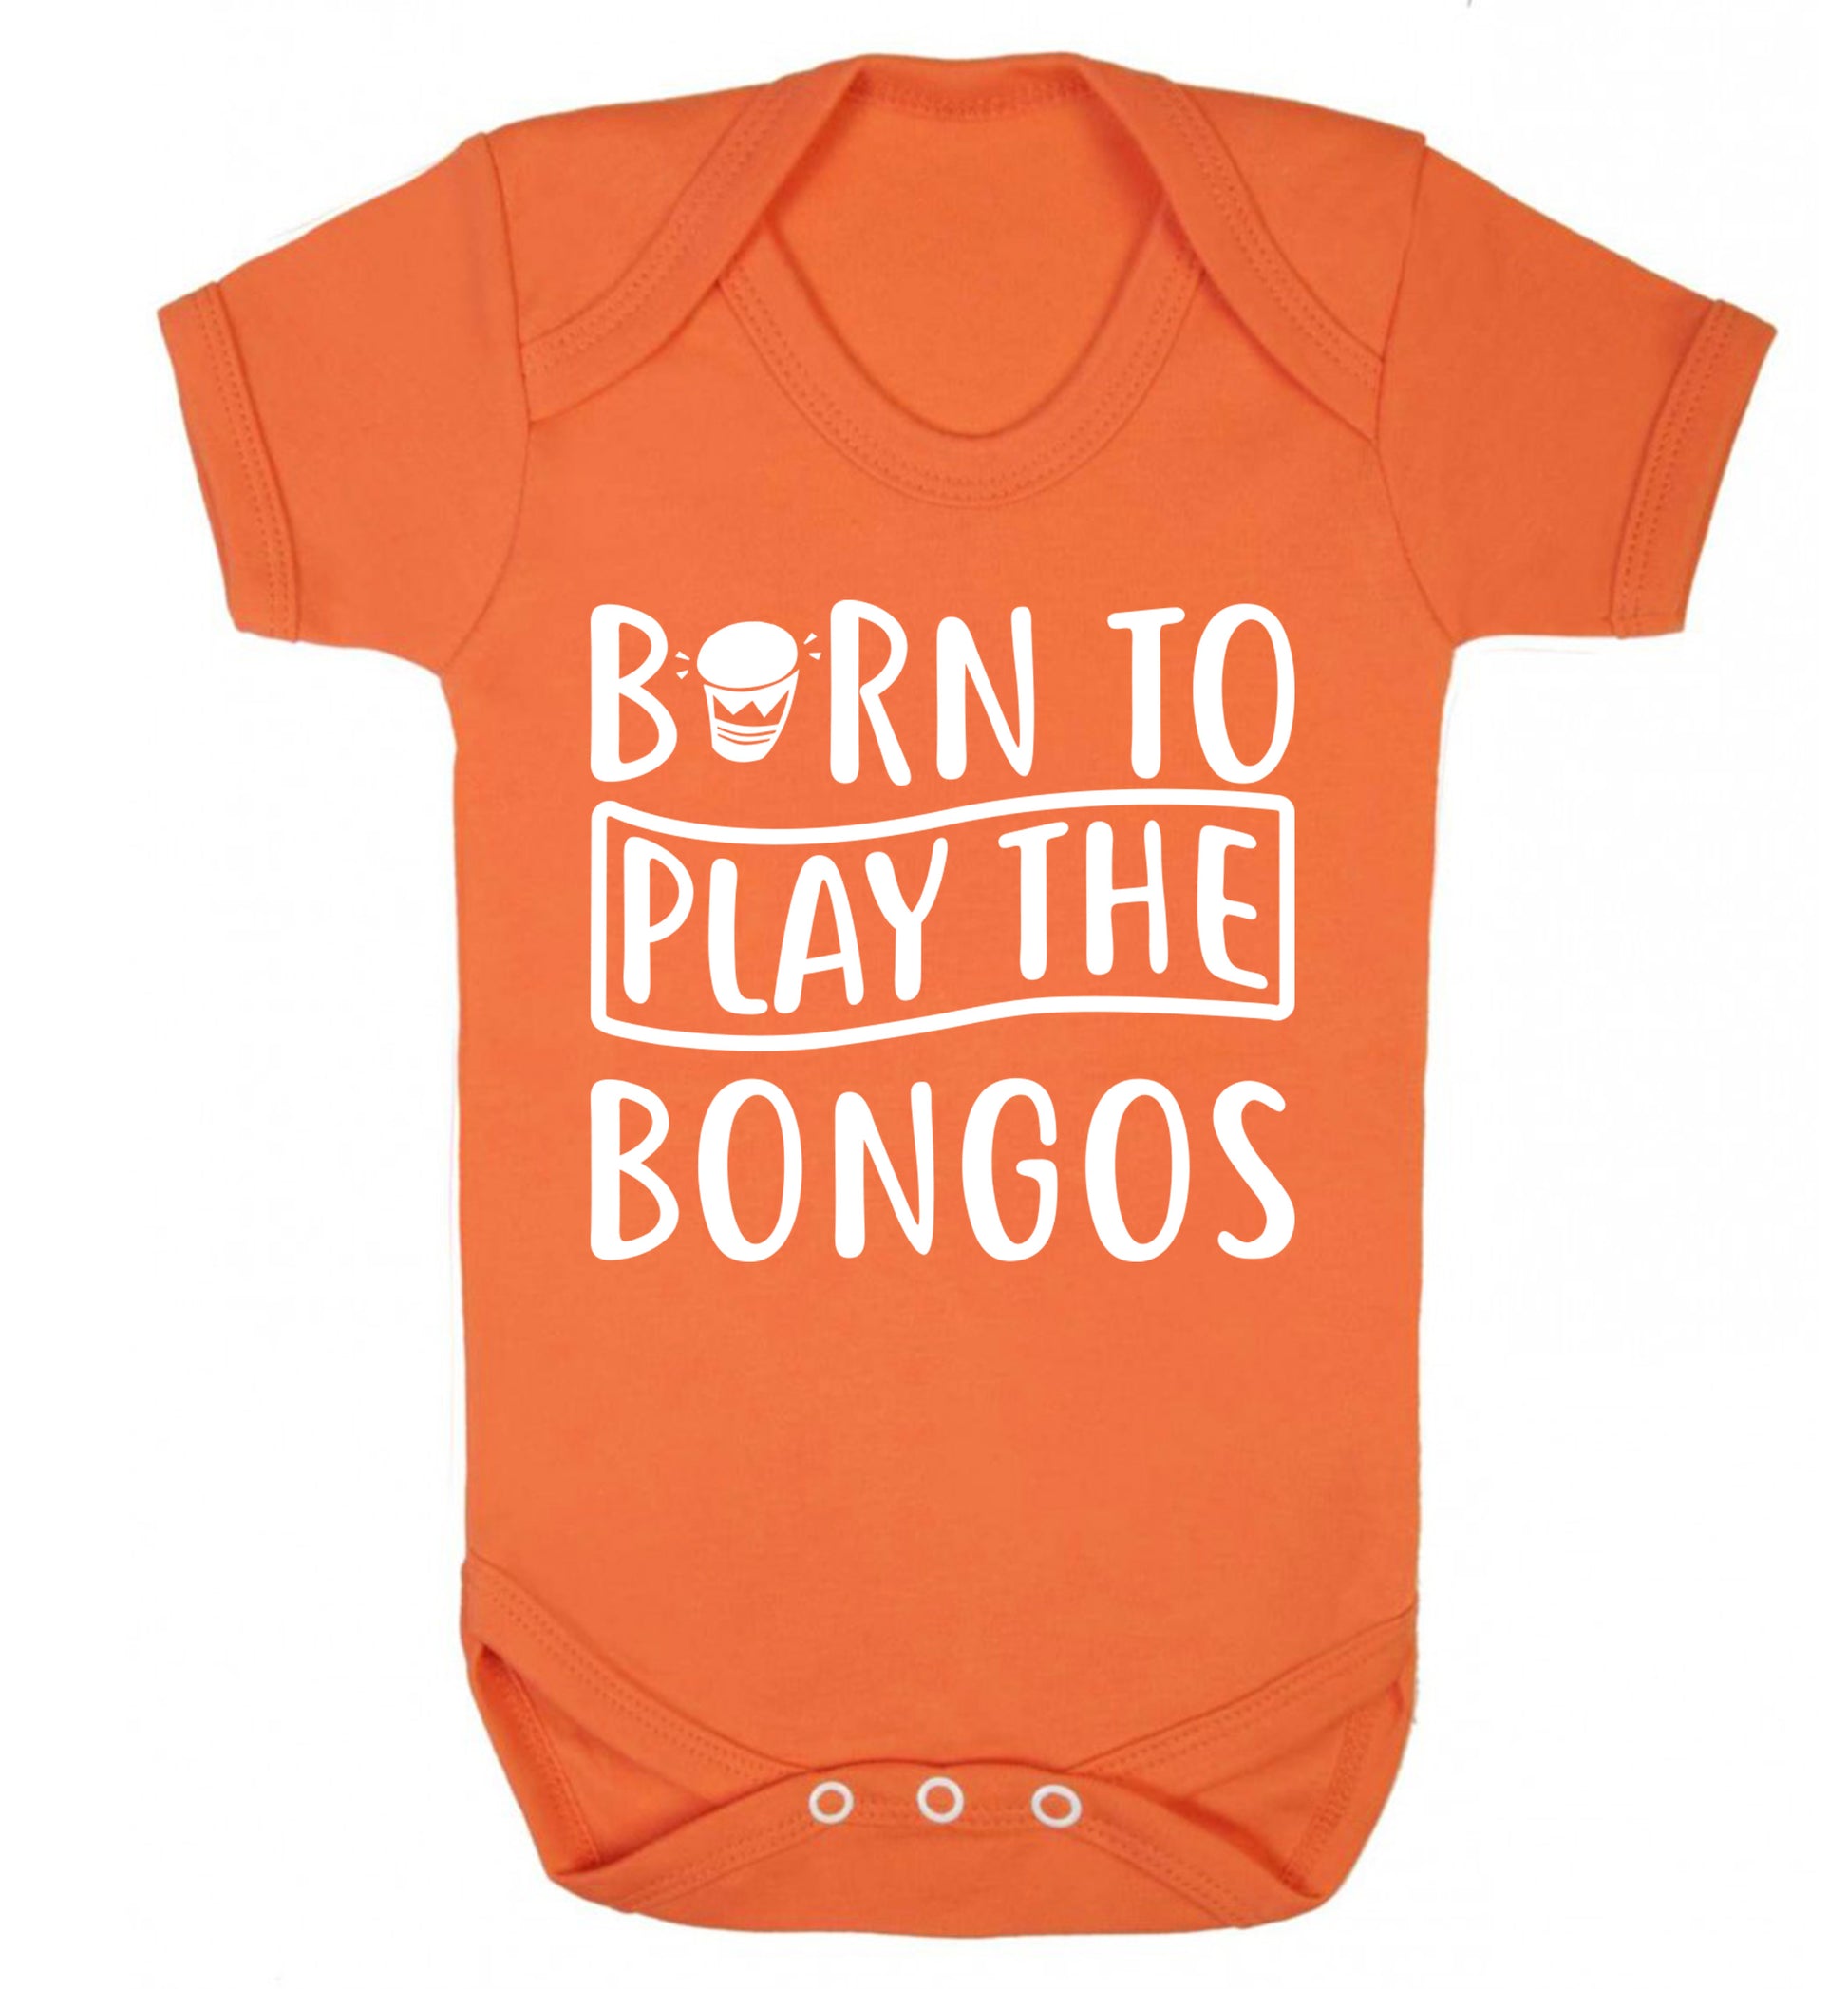 Born to play the bongos Baby Vest orange 18-24 months